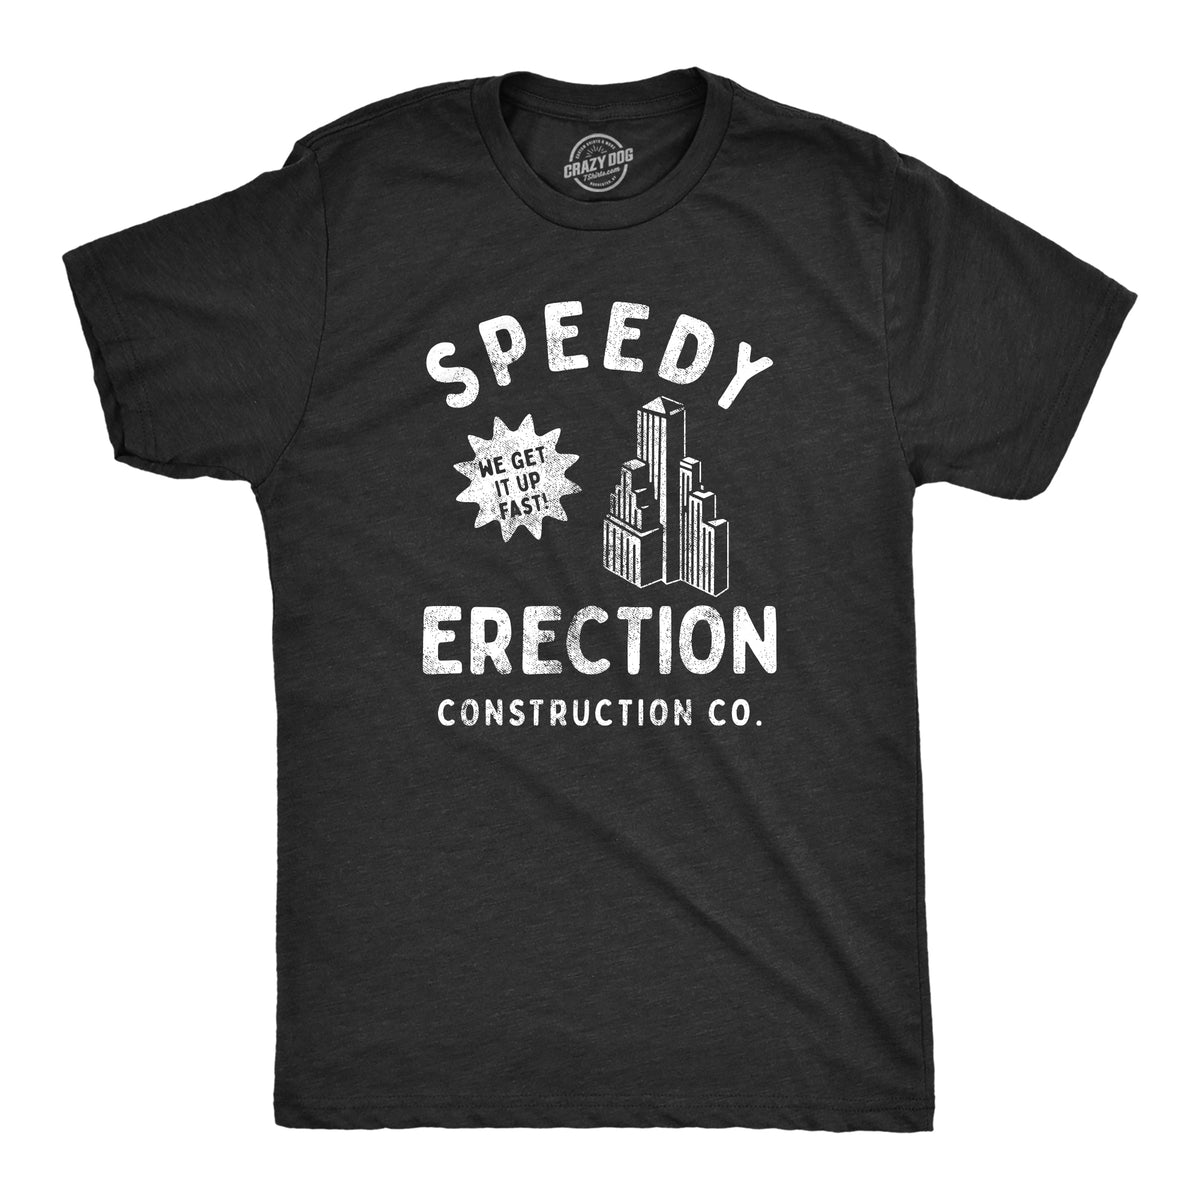 Funny Heather Black - ERECTION Speedy Erection Construction Co Mens T Shirt Nerdy sex Sarcastic Tee